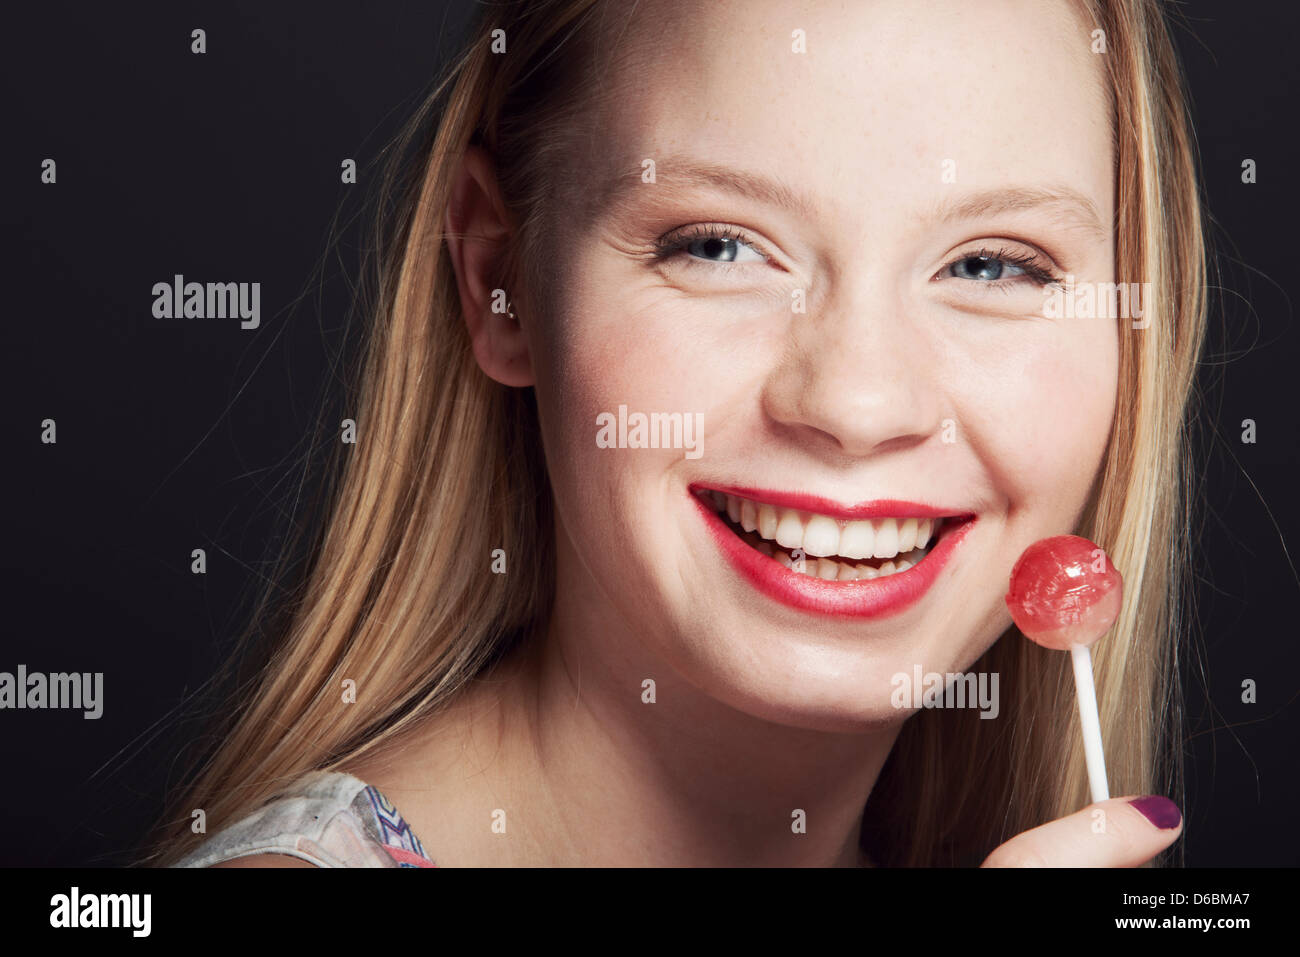 Smiling woman eating lollipop Stock Photo